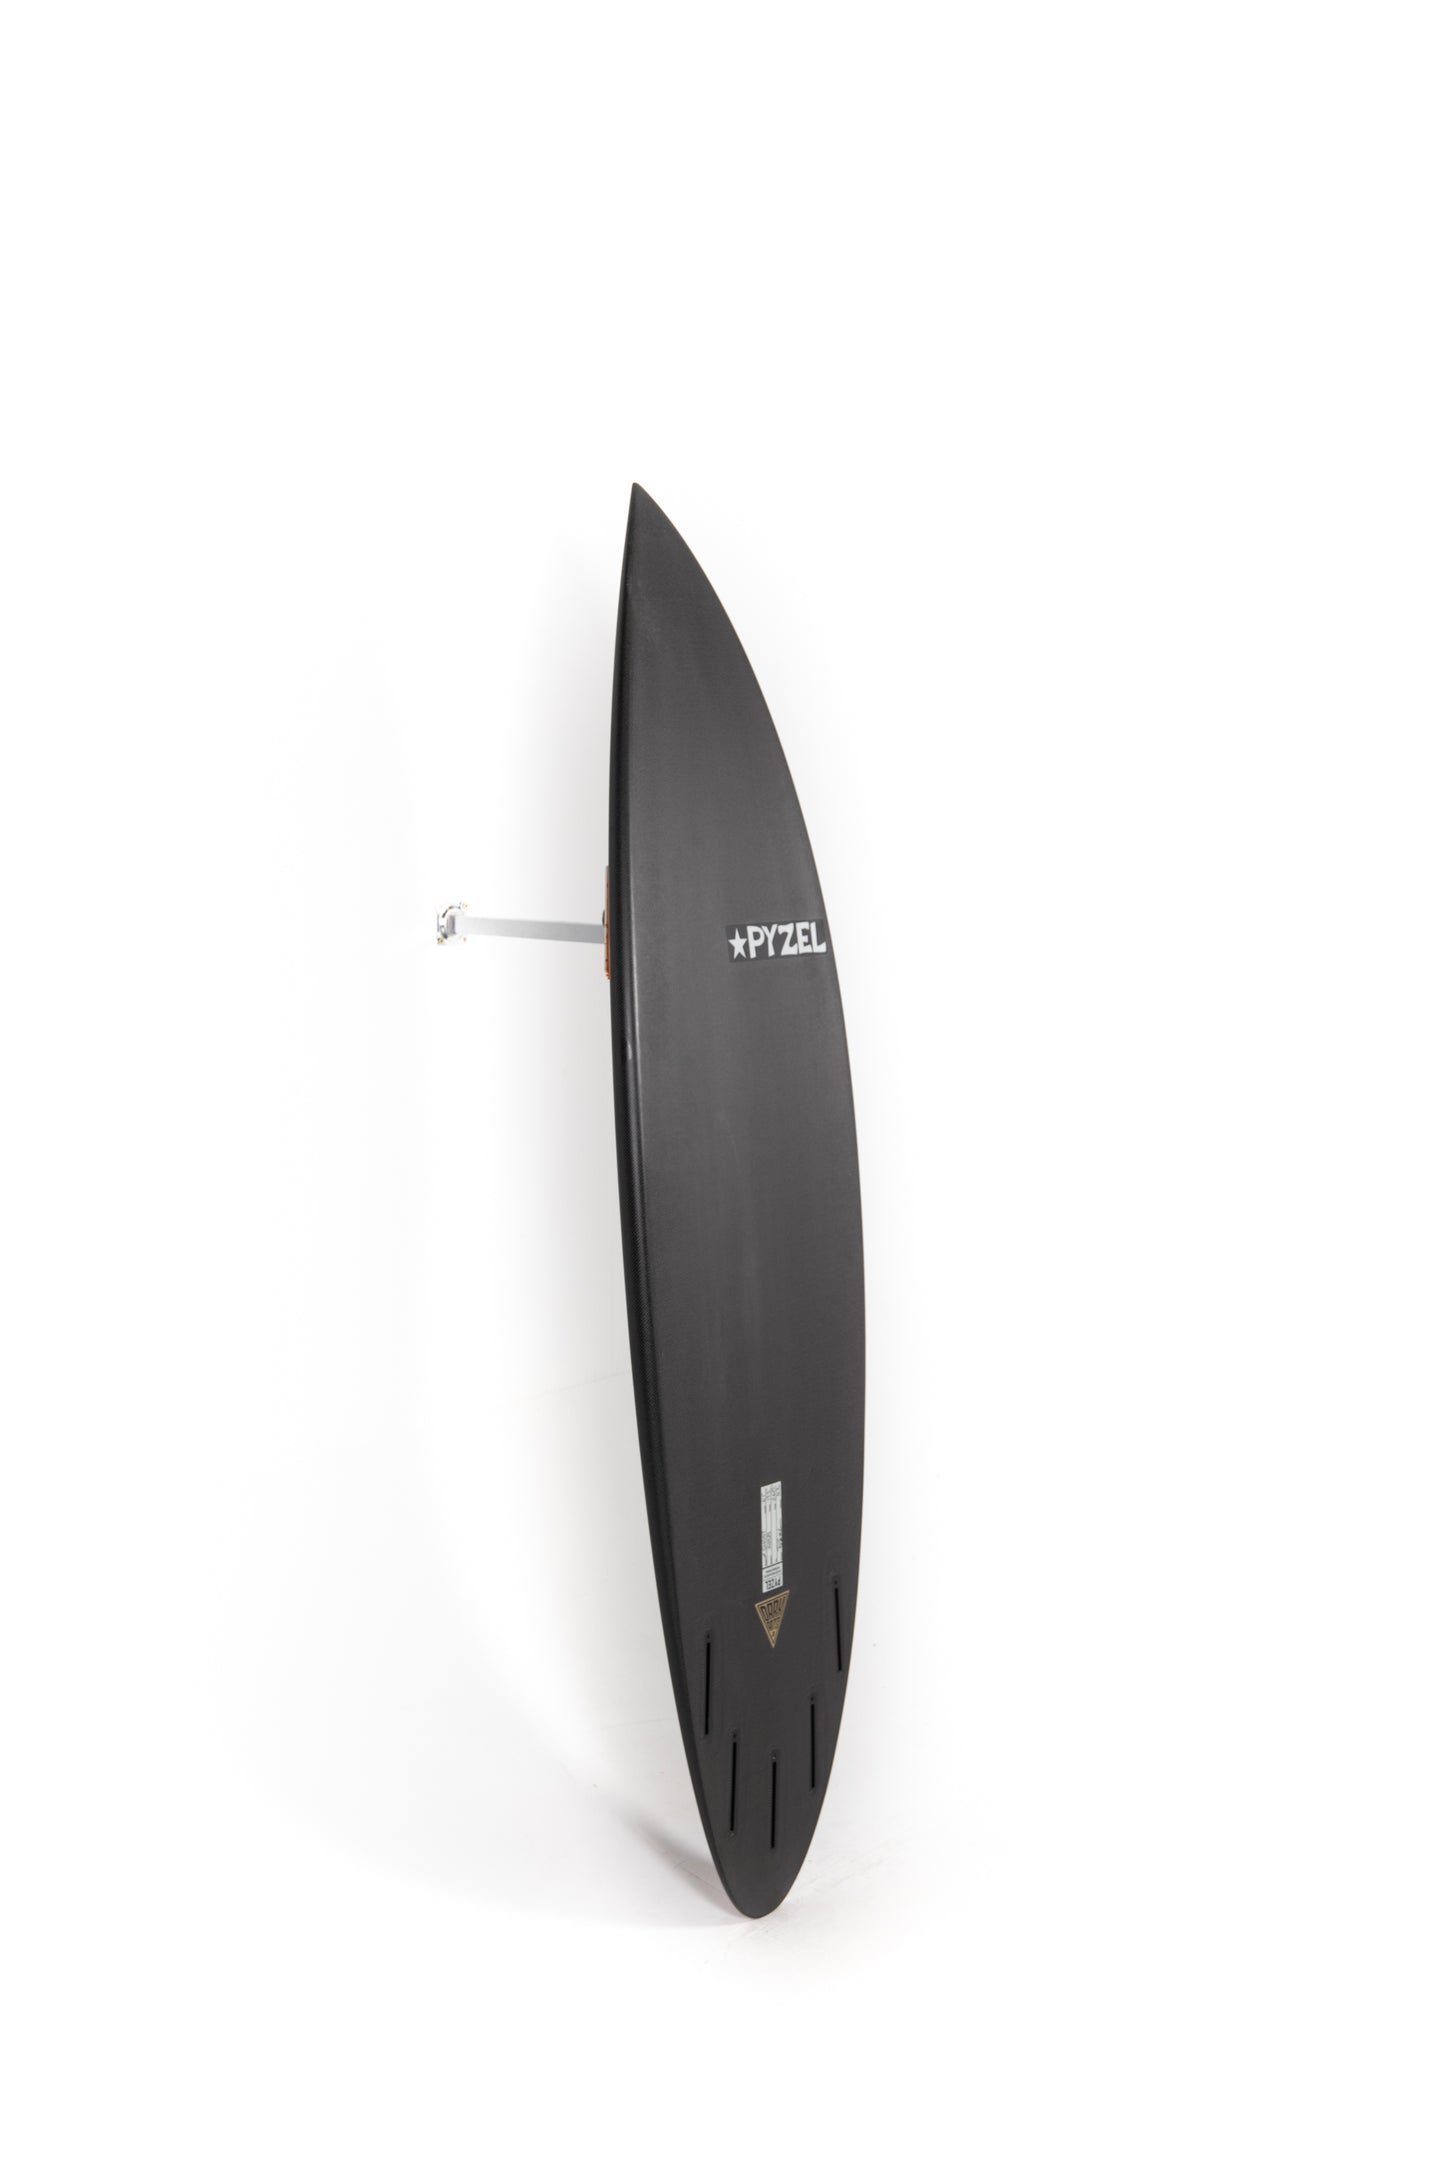 
                  
                    Pukas-Surf-Shop-Pyzel-Surfboards-Ghost-Jon-Pyzel-6_1
                  
                